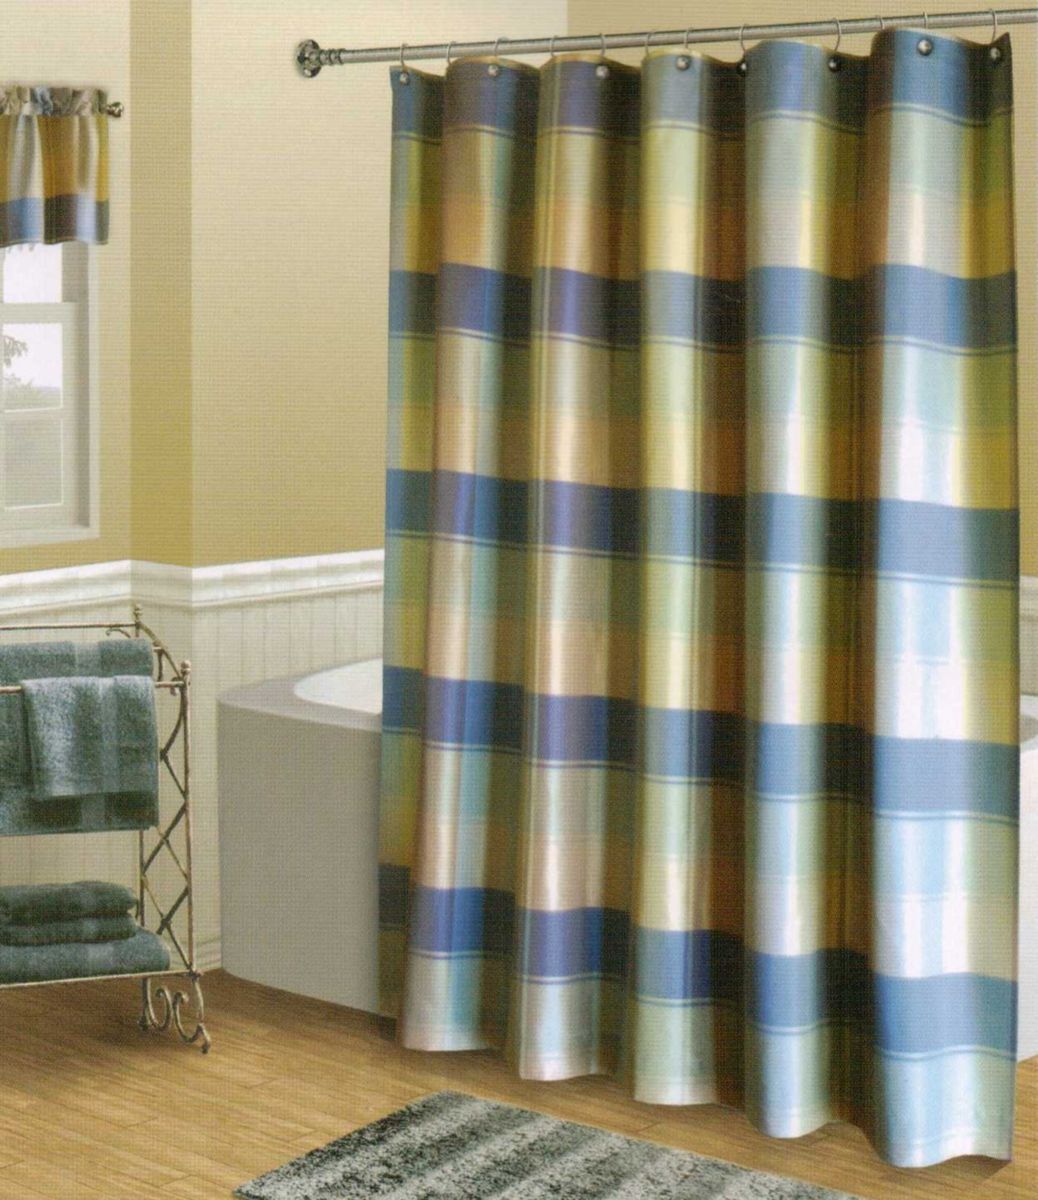 Plaid Blue Green Tan Textured Luxury Fabric Shower Curtain NEW